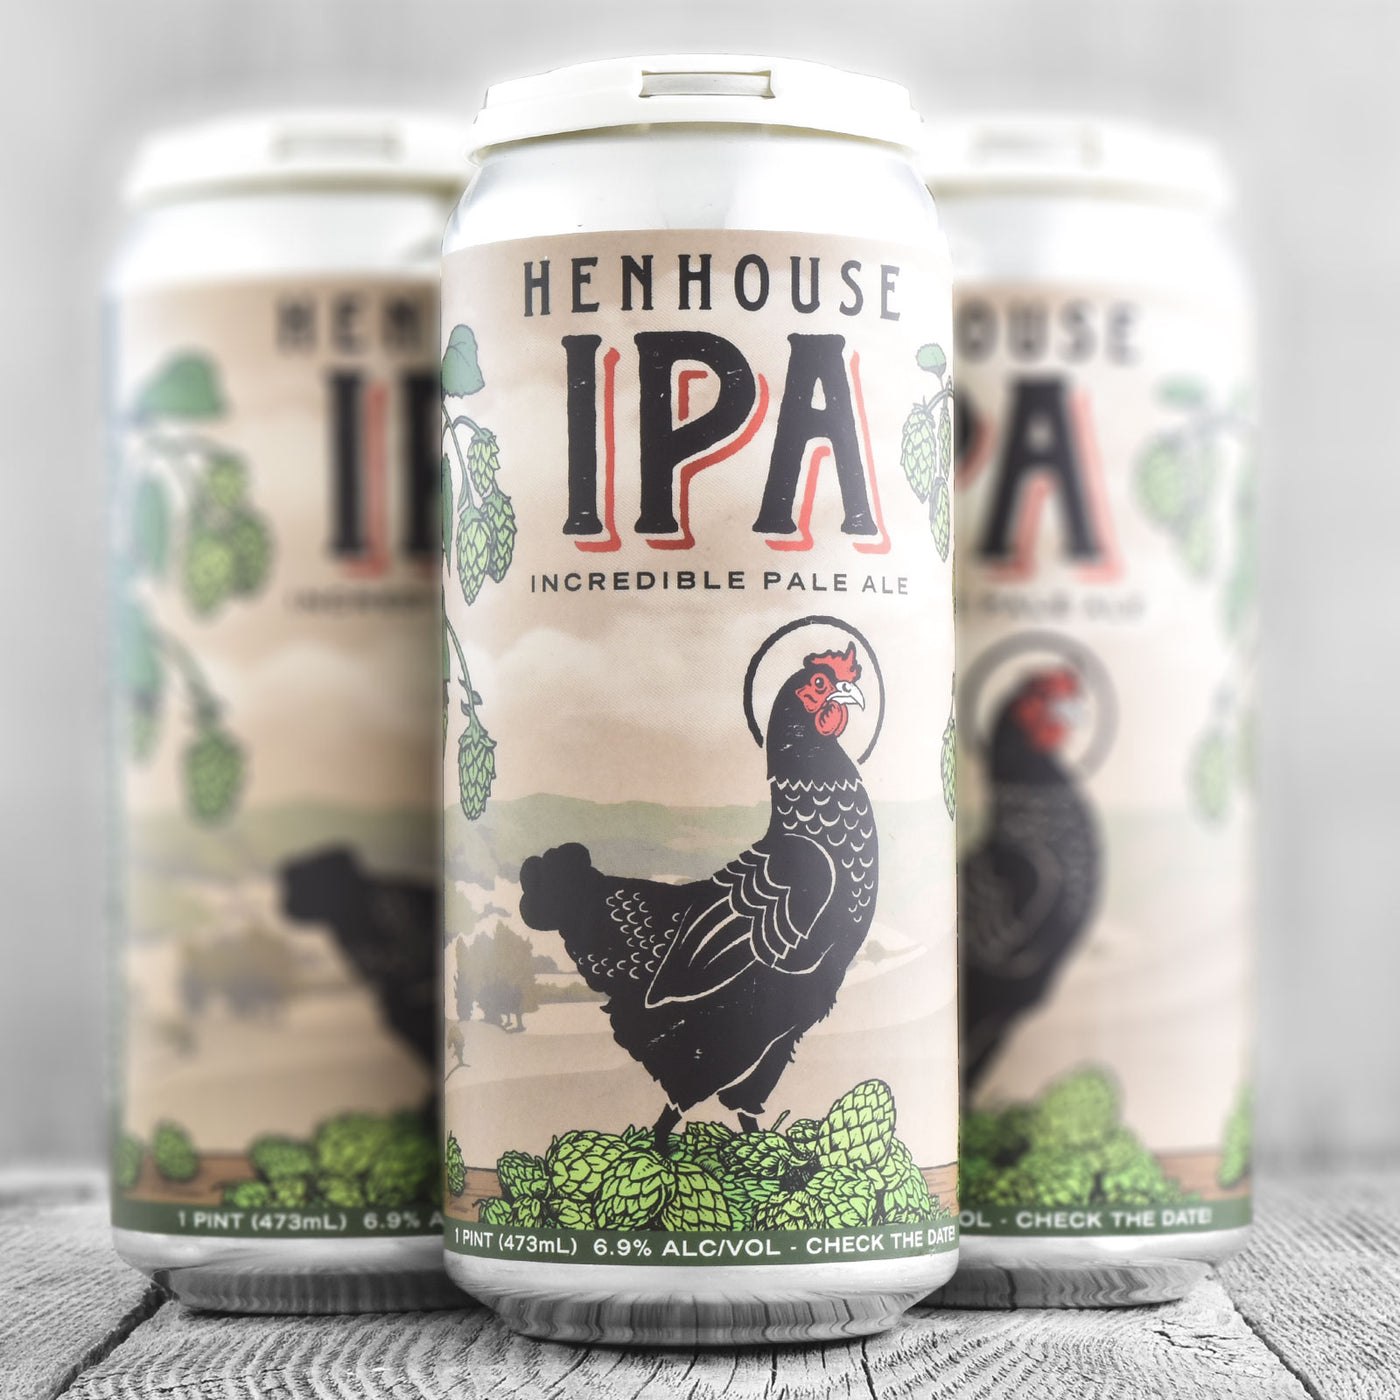 HenHouse IPA Incredible Pale Ale